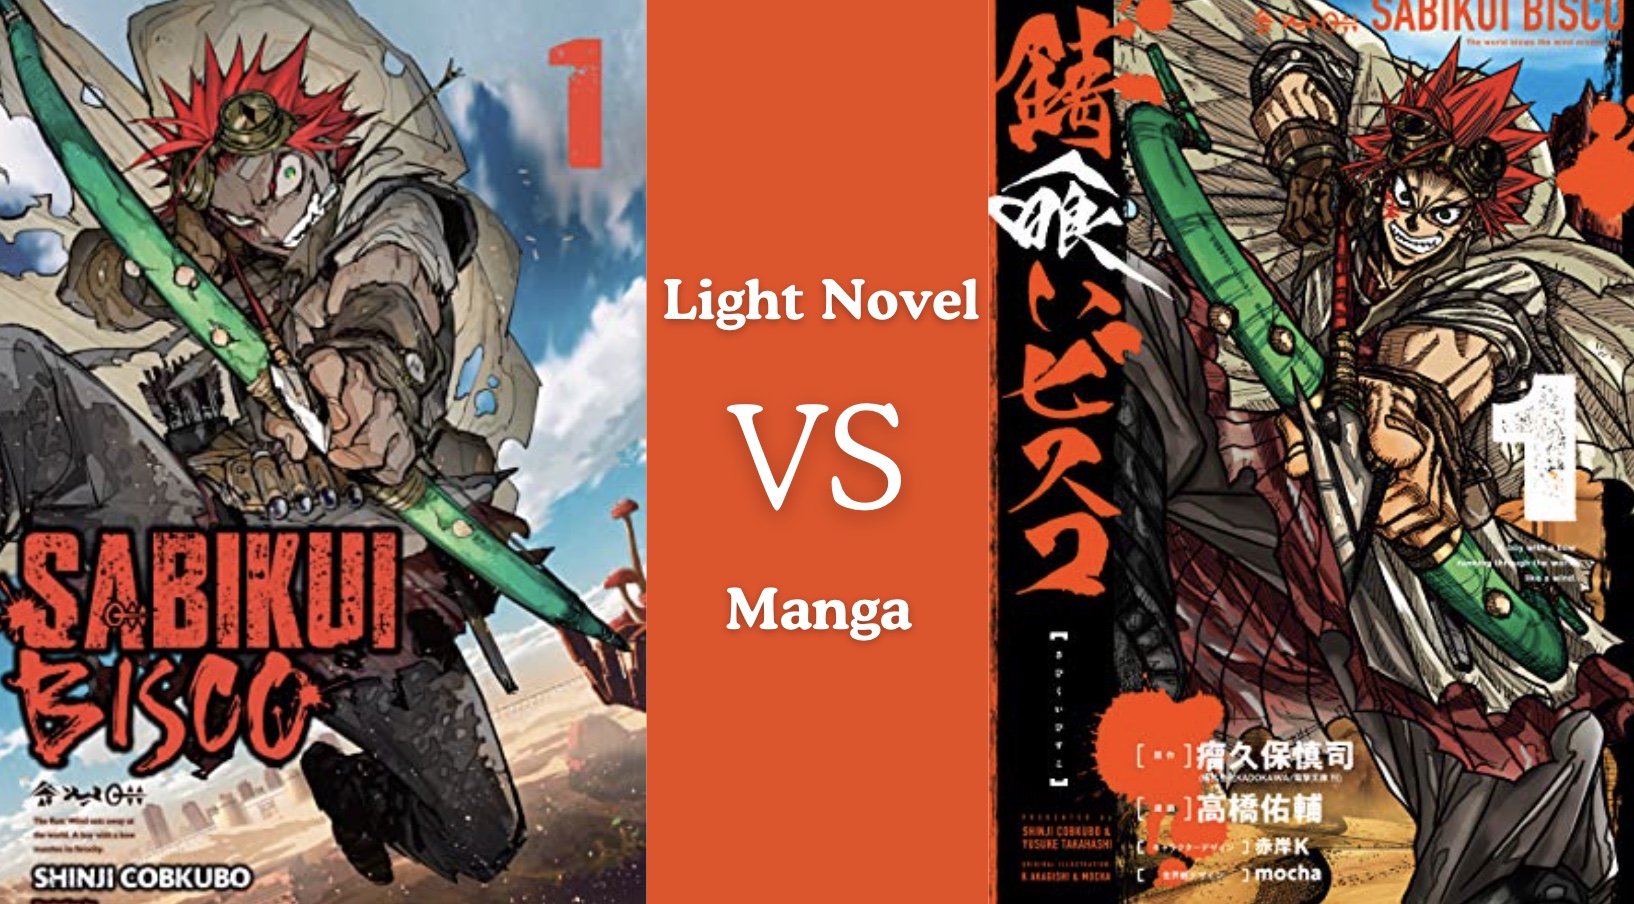 Sabikui Bisco Light Novel or Manga